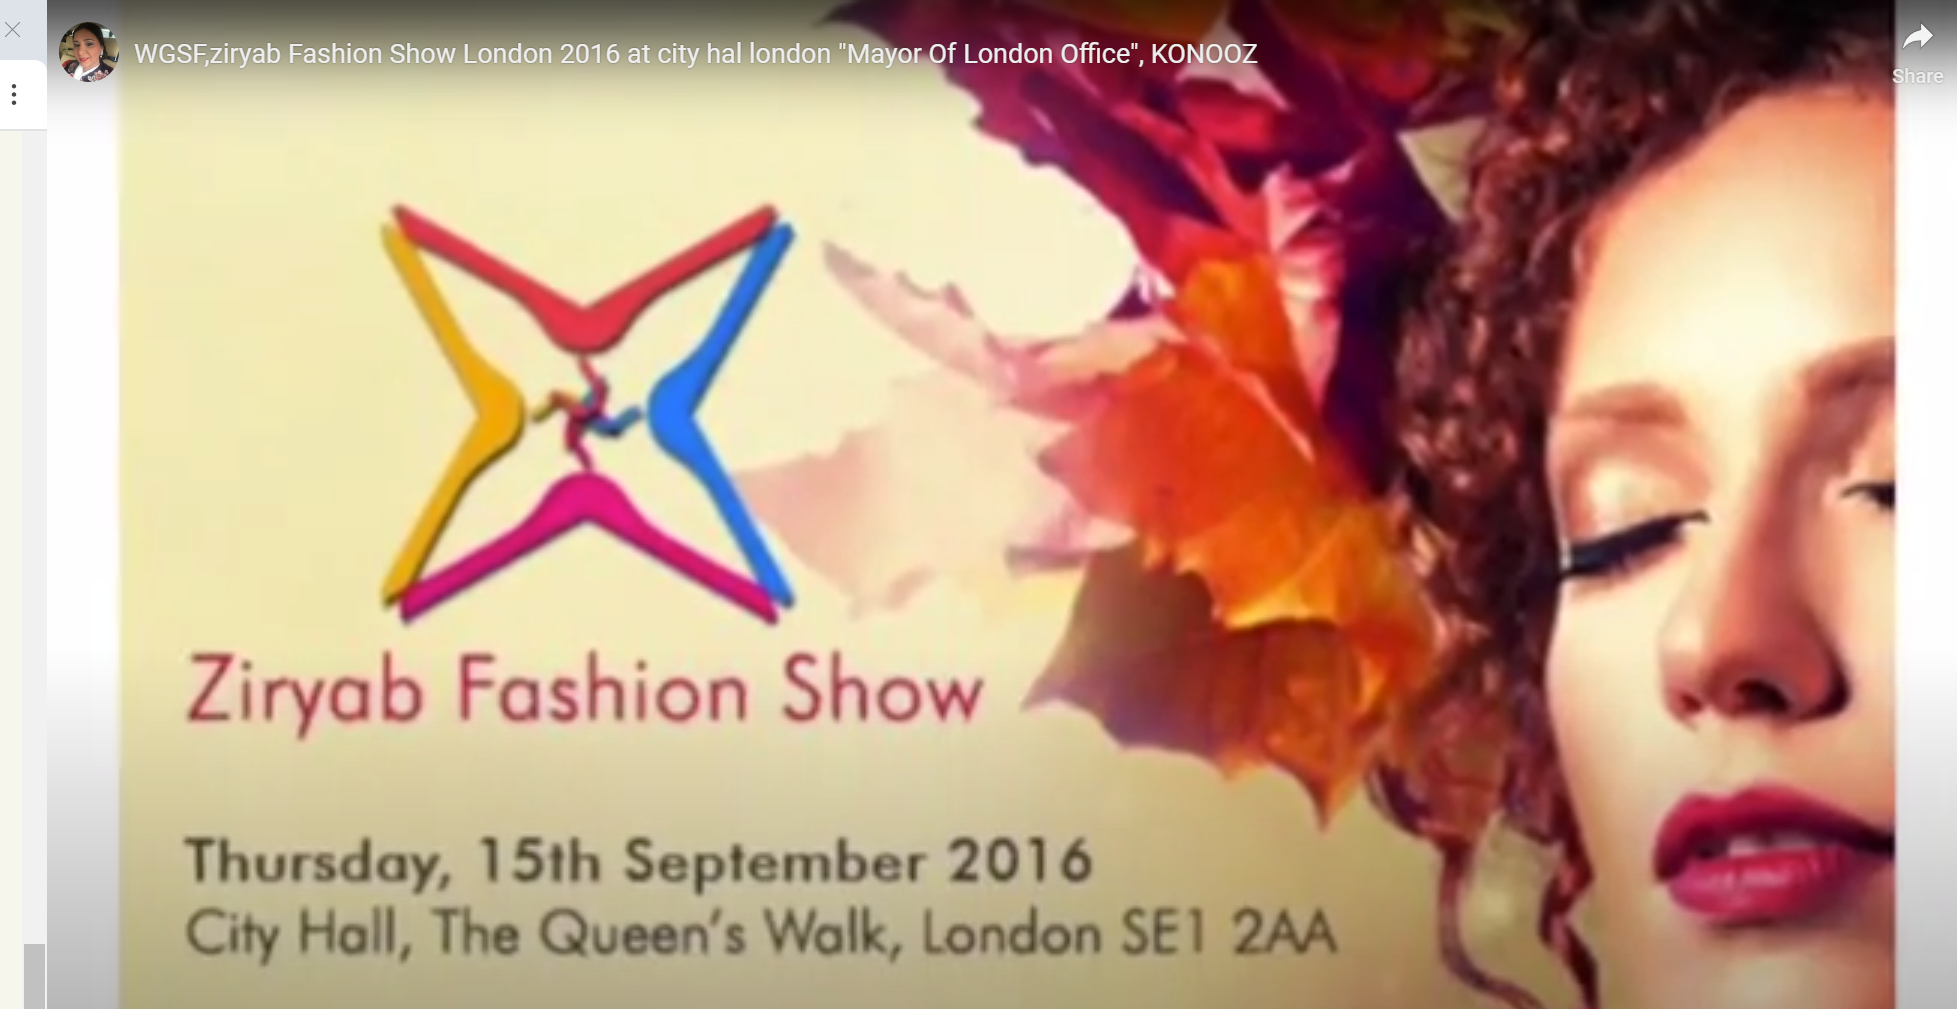 WGSF,ziryab Fashion Show London 2016 at city hal london "Mayor Of London Office", KONOOZ